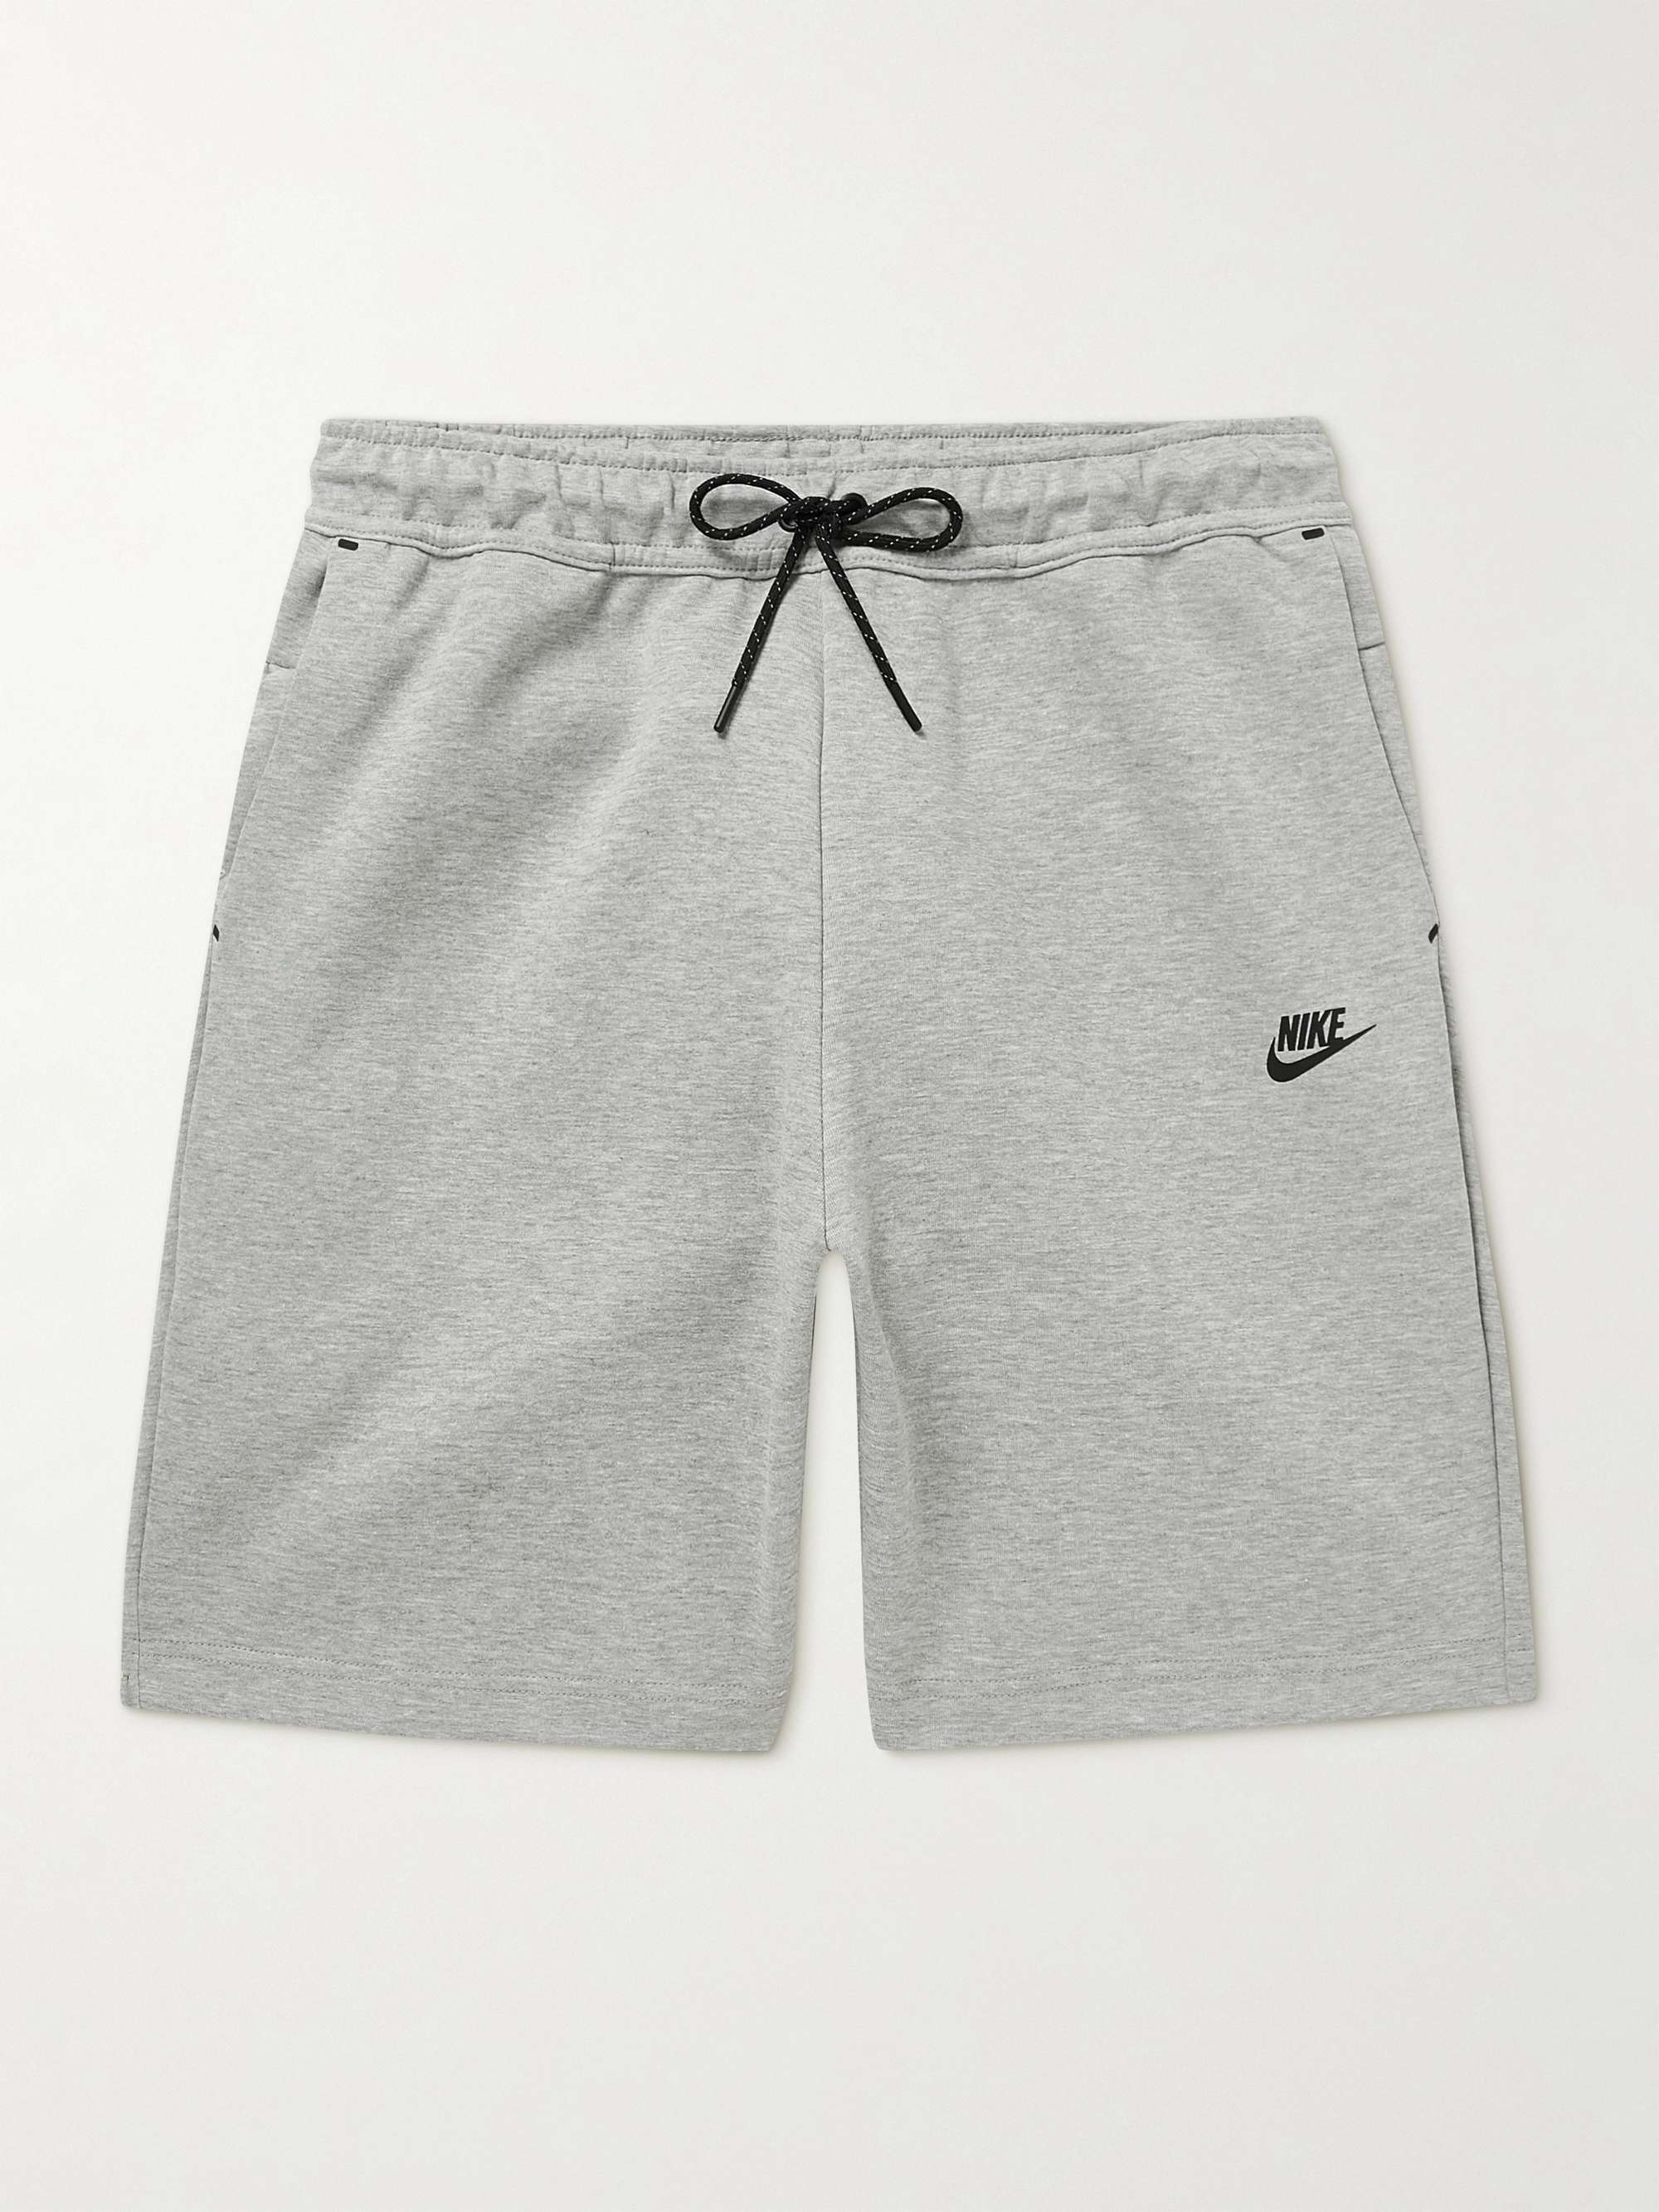 Nike Men's Tech Fleece Shorts, Medium, Black